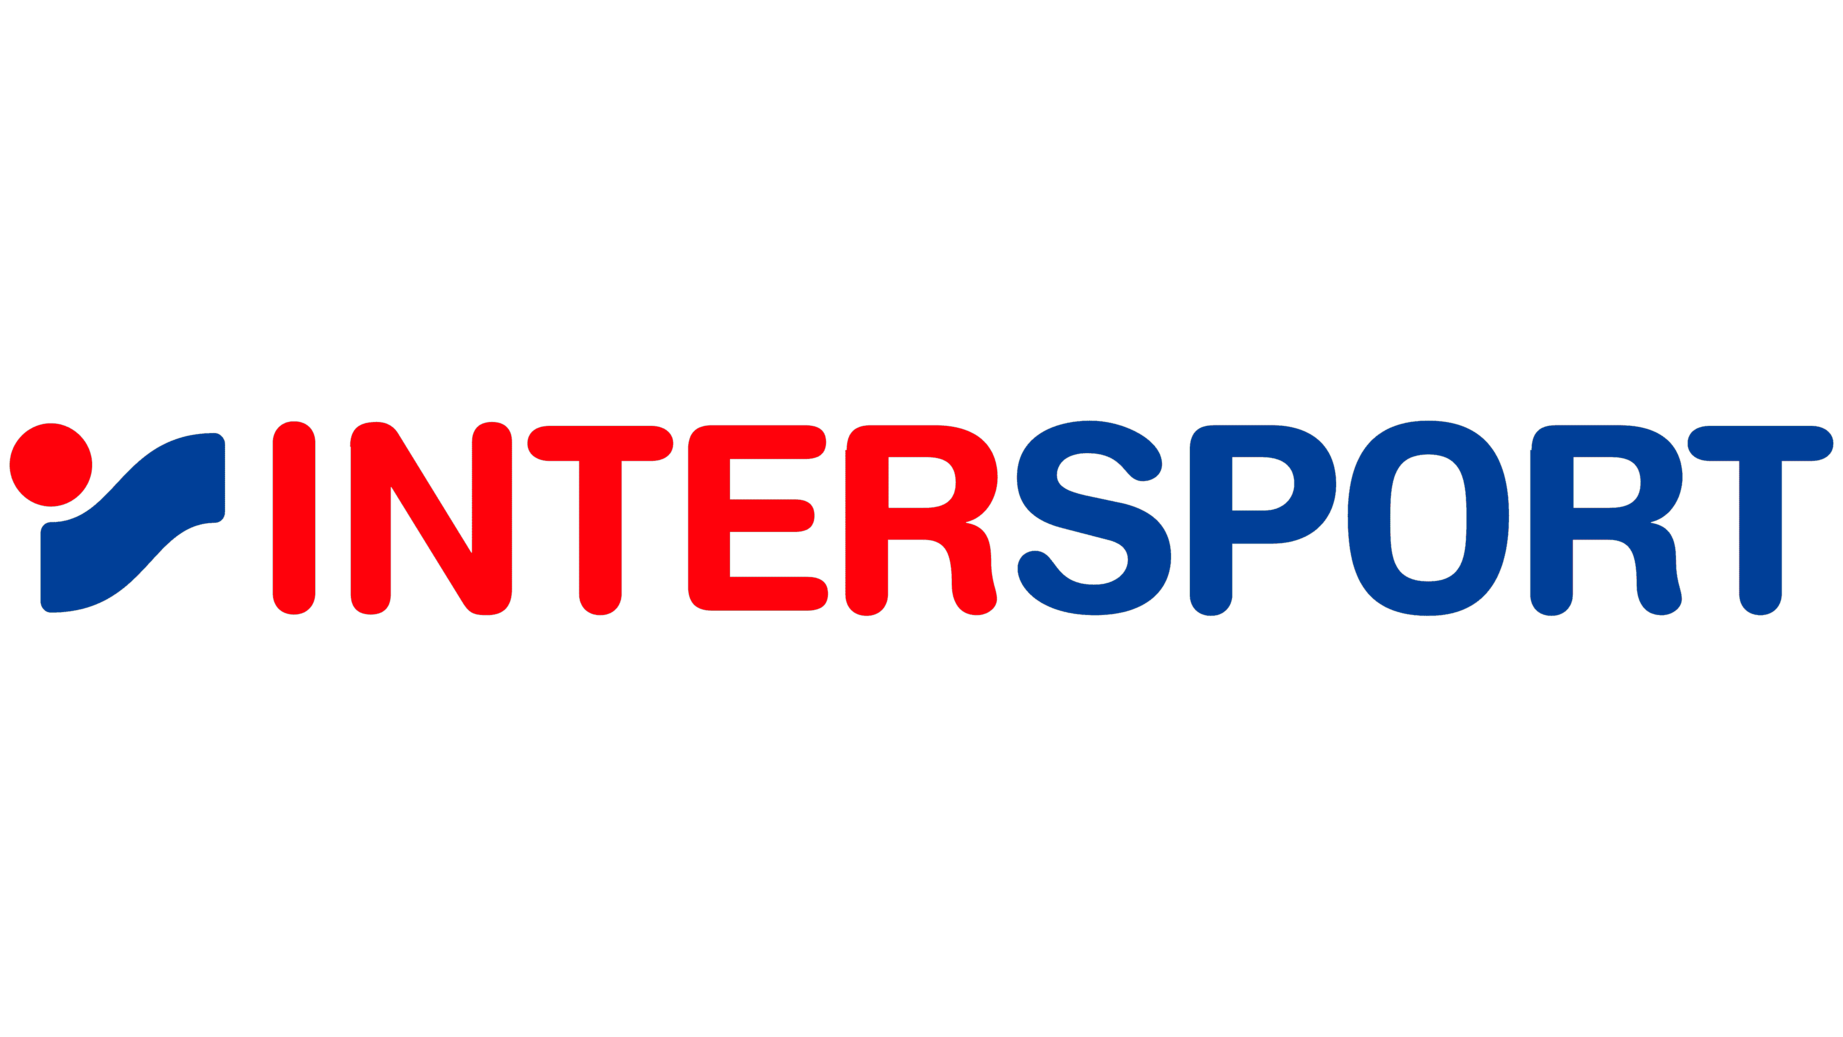 Intersport sign